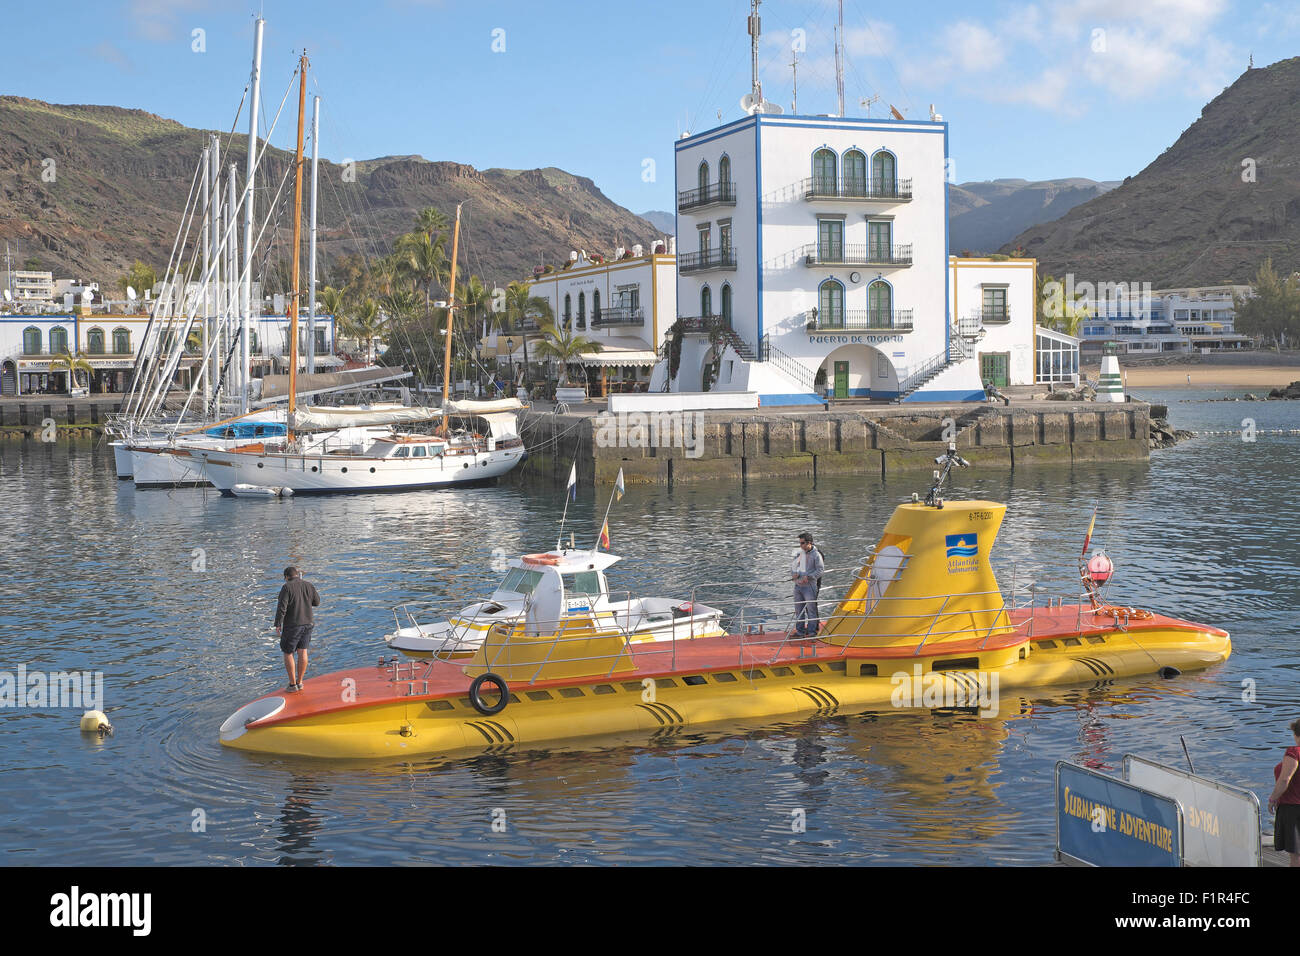 Touristische Semi-U-Boot, pueto de Mogan, Gran Canaria, Kanarische Inseln, Spanien. Stockfoto